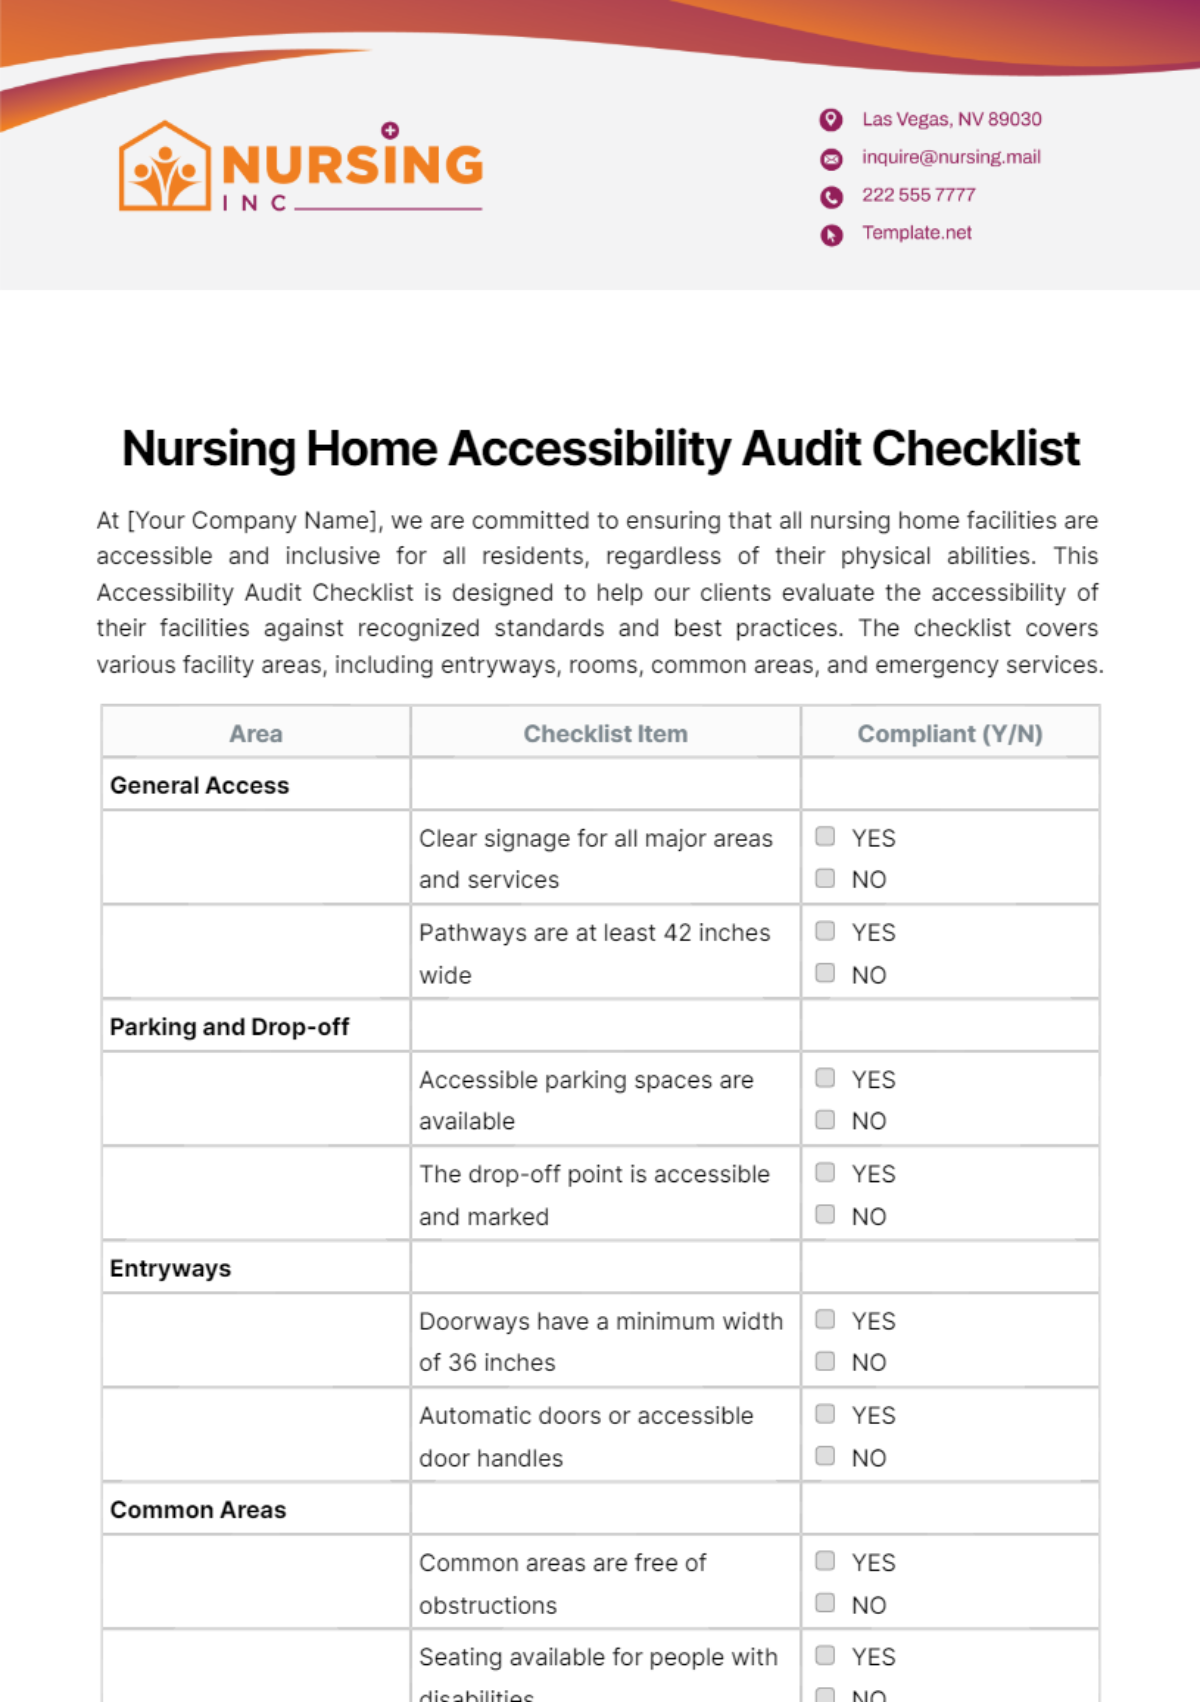 Nursing Home Accessibility Audit Checklist Template